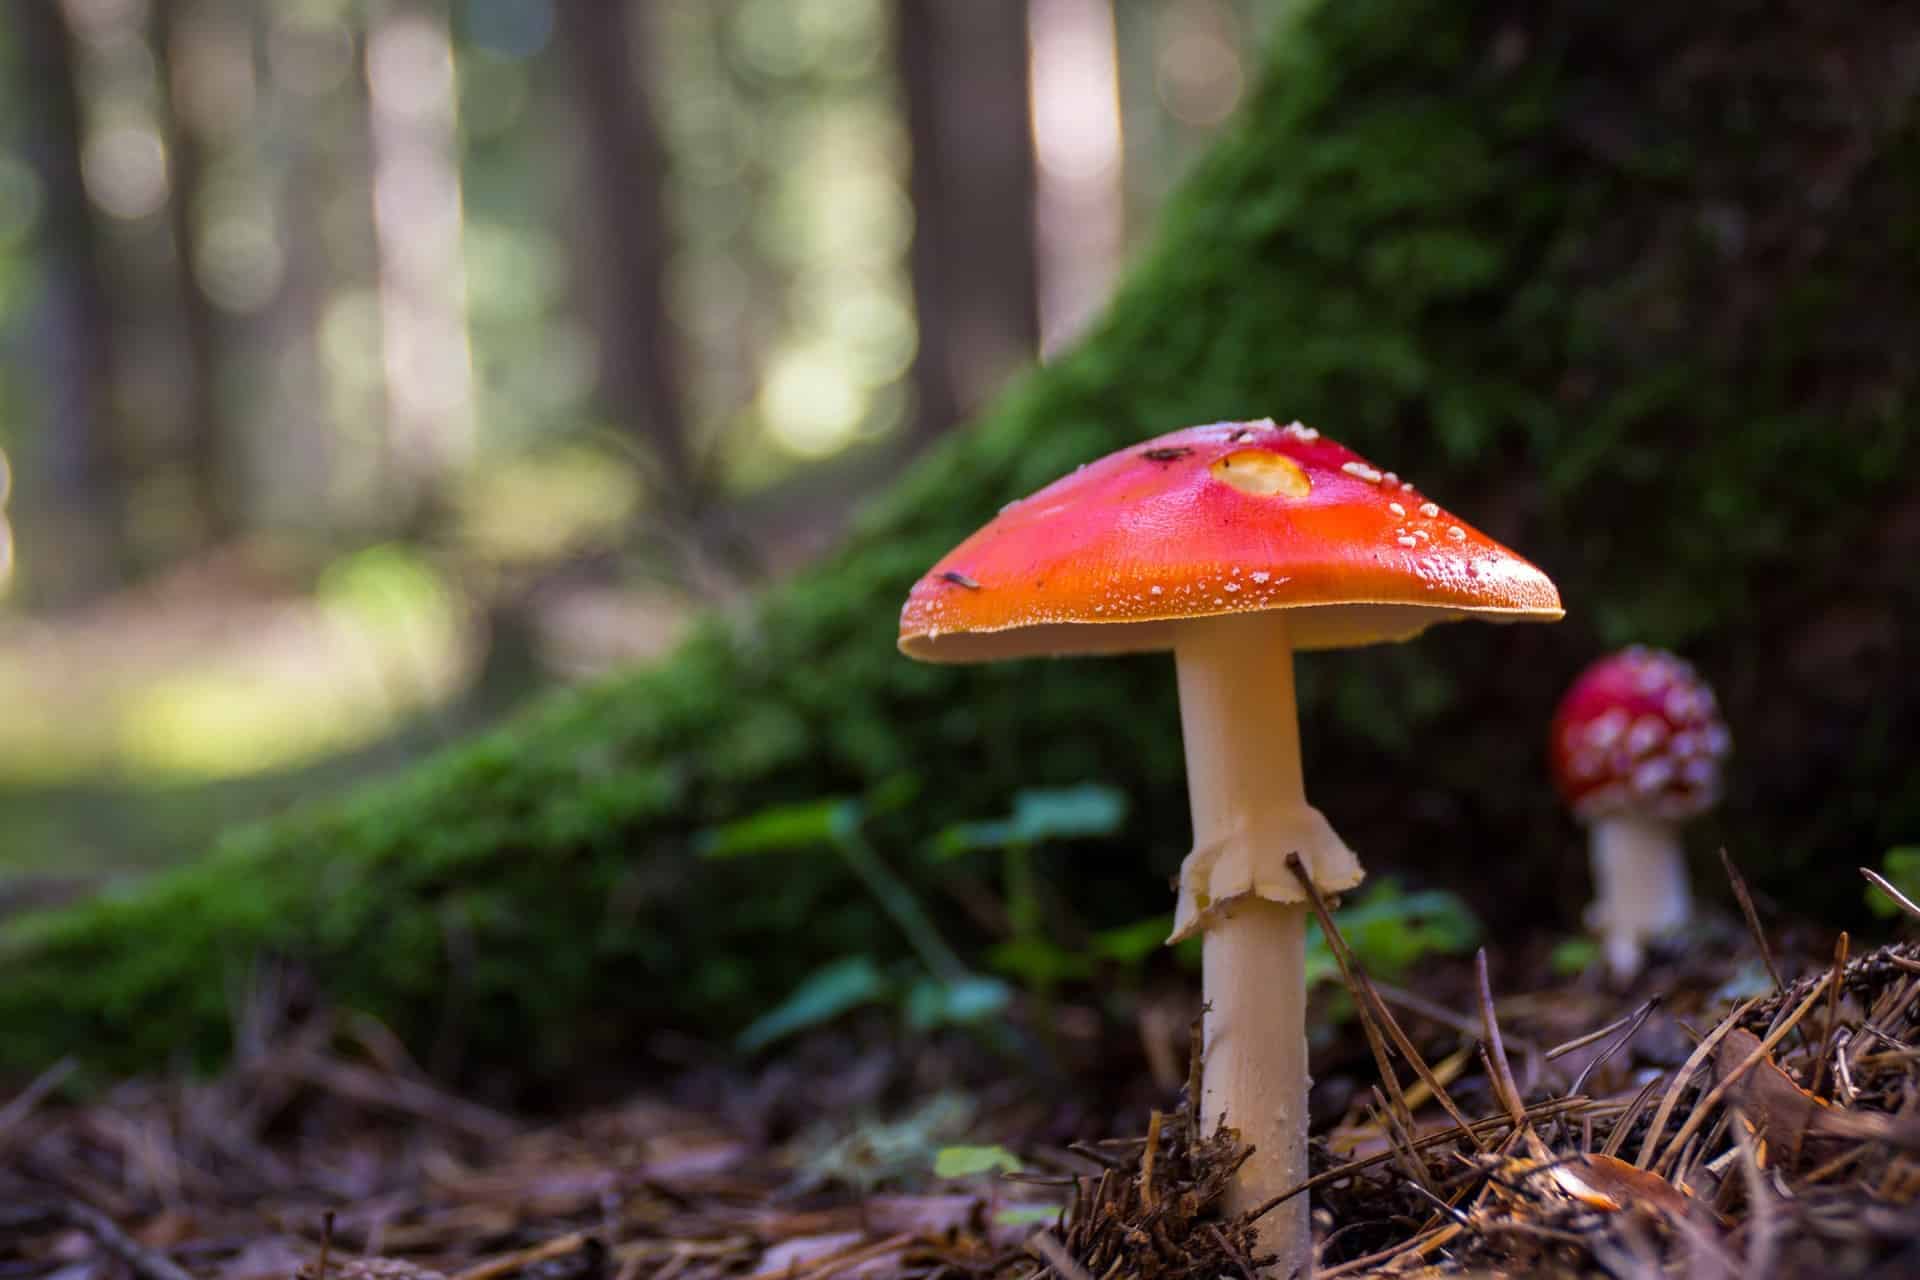 Poisonous Mushrooms That Look Like Morels Mushroom Health Guide